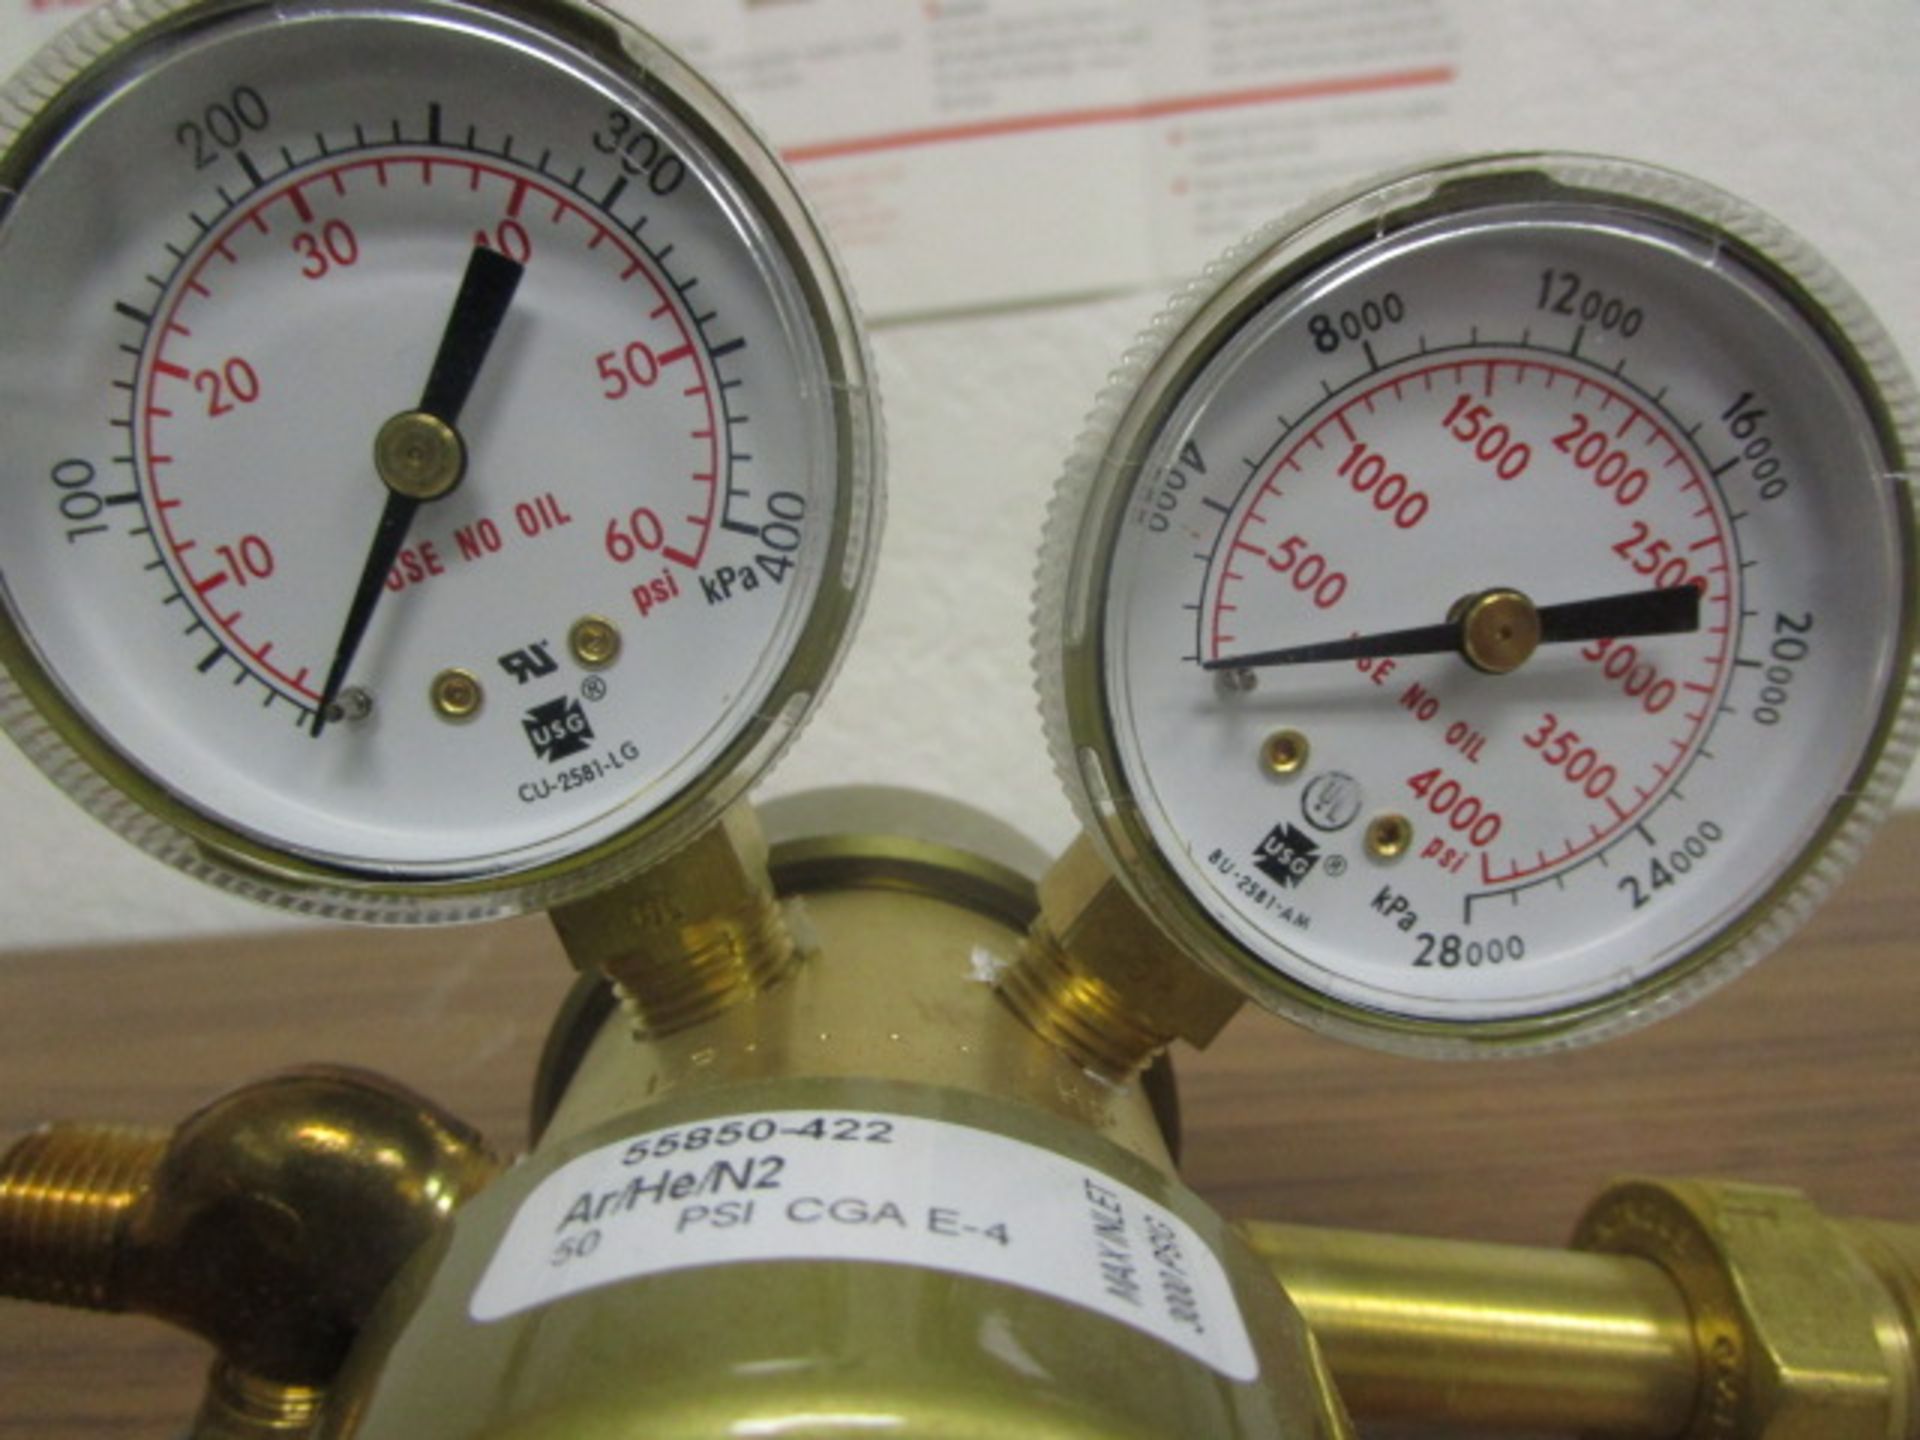 VWR gas regulator Ar/He/N2 50 psi CGA E-4 - Image 3 of 7